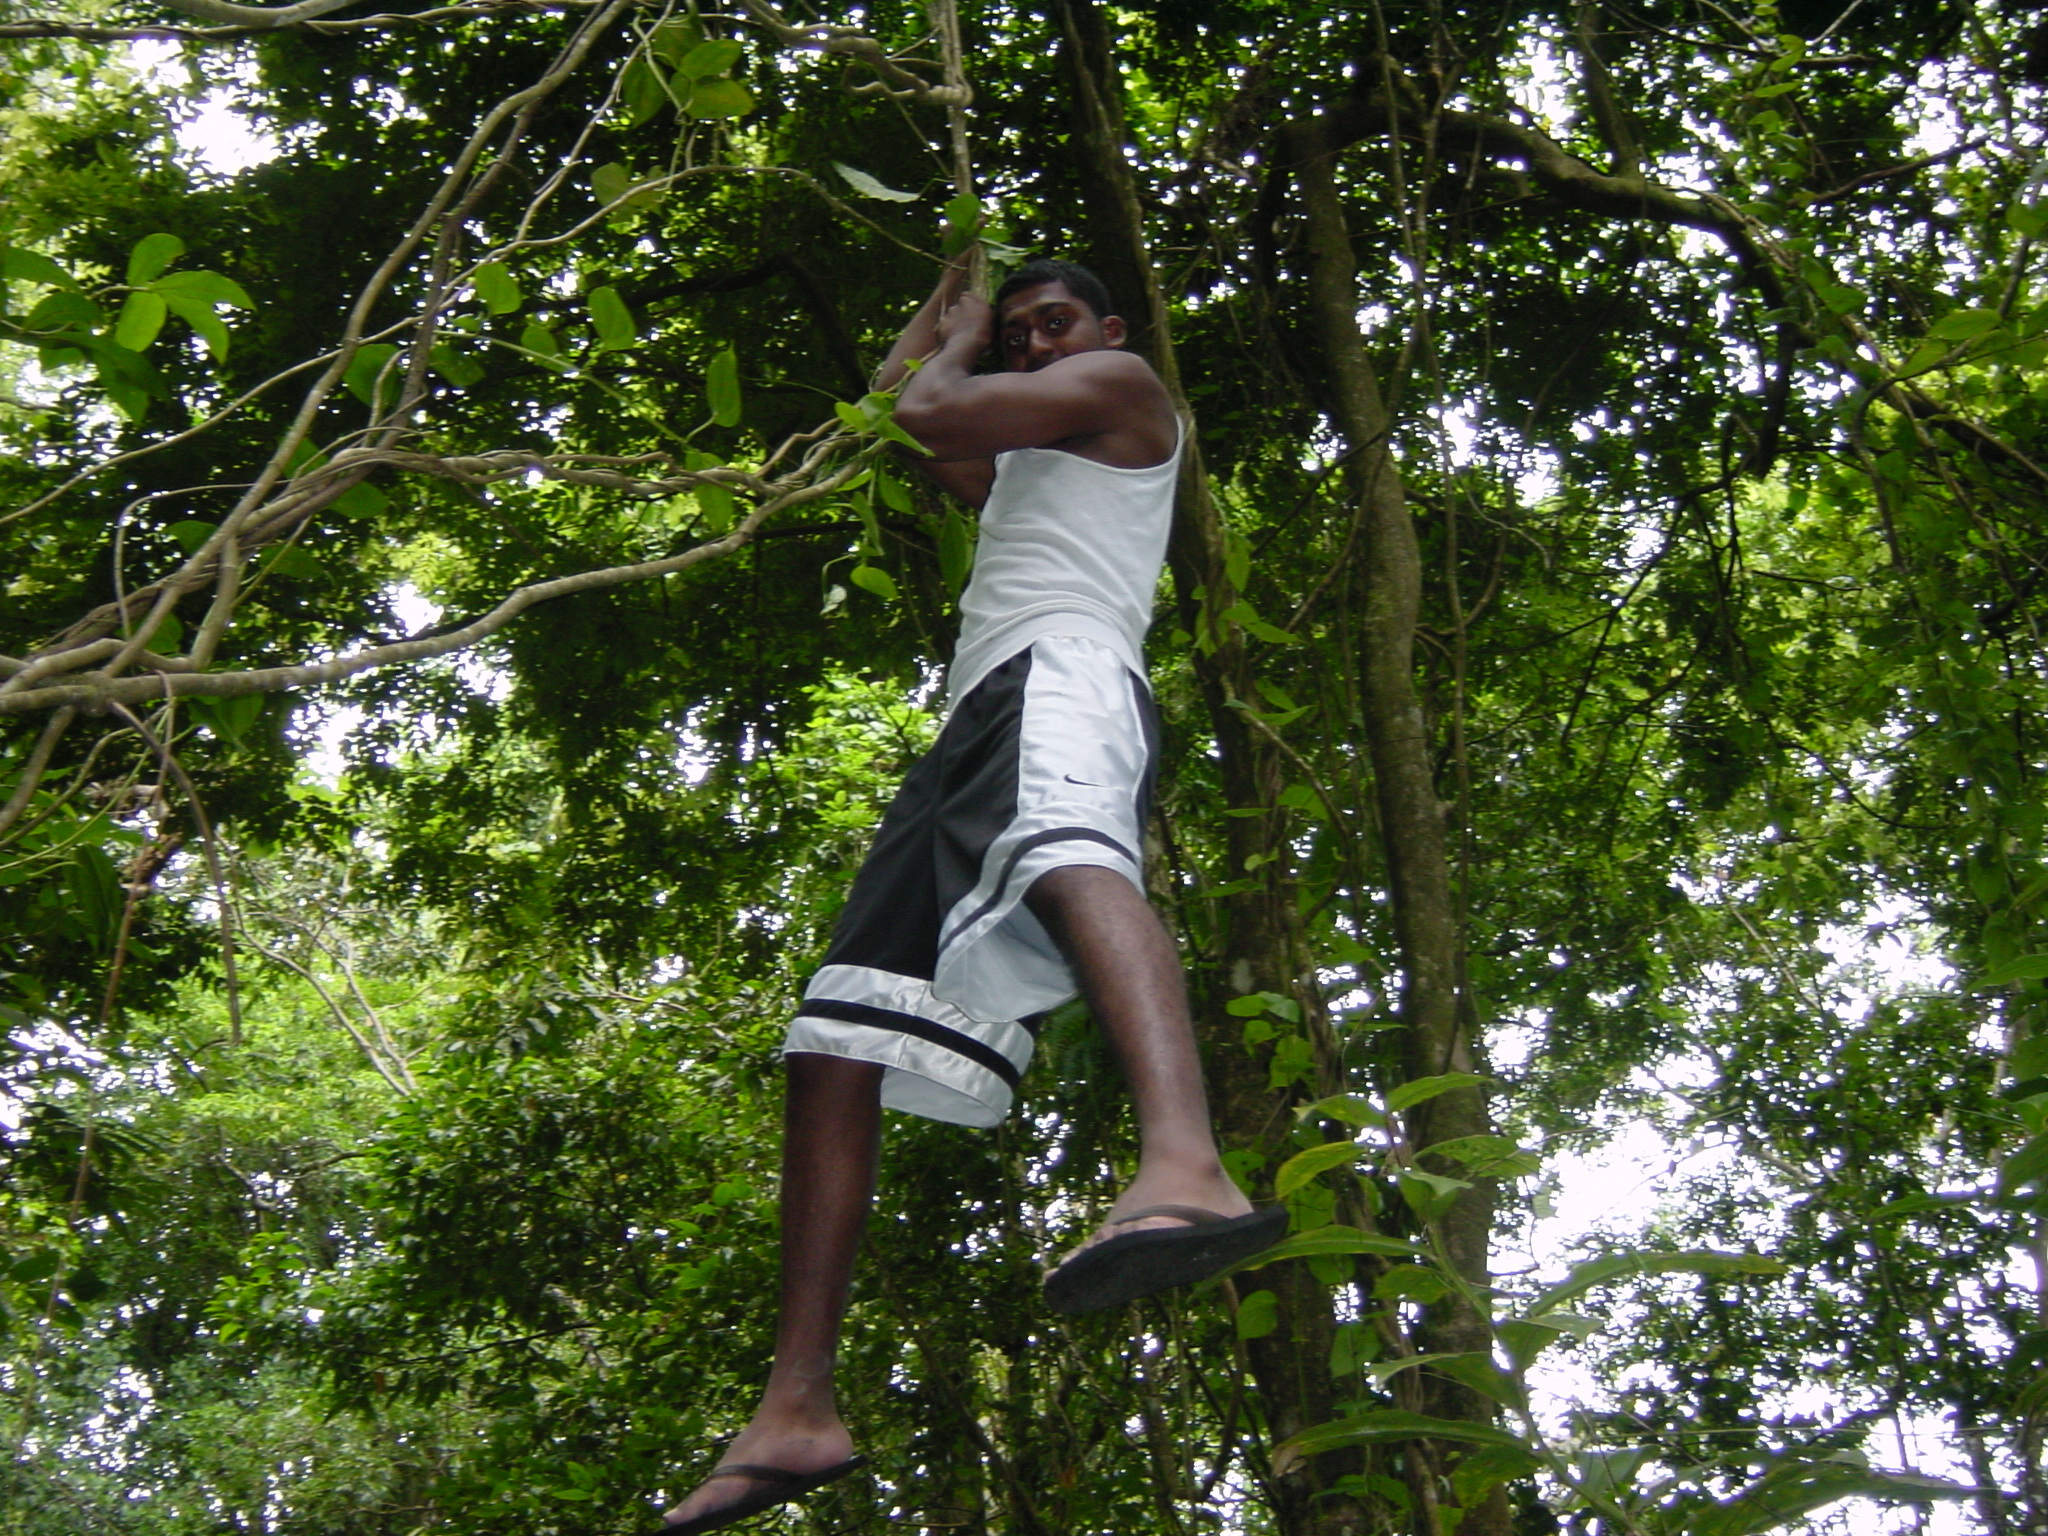 Lowell was climbing the vines like a ghetto Indian Tarzan!